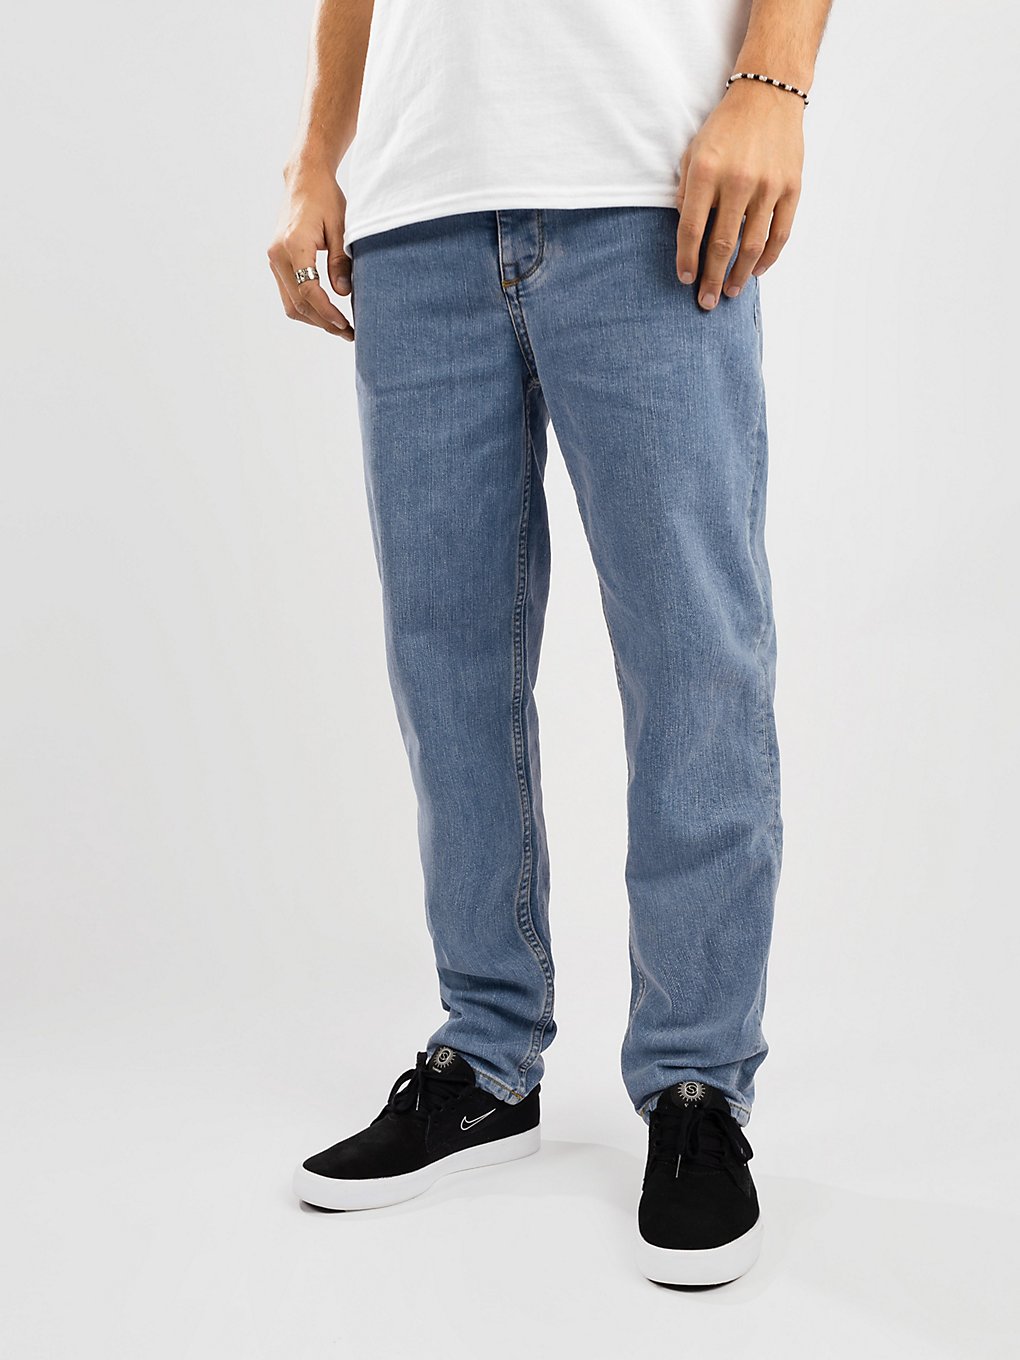 Homeboy X-tra LOOSE Flex Jeans blauw